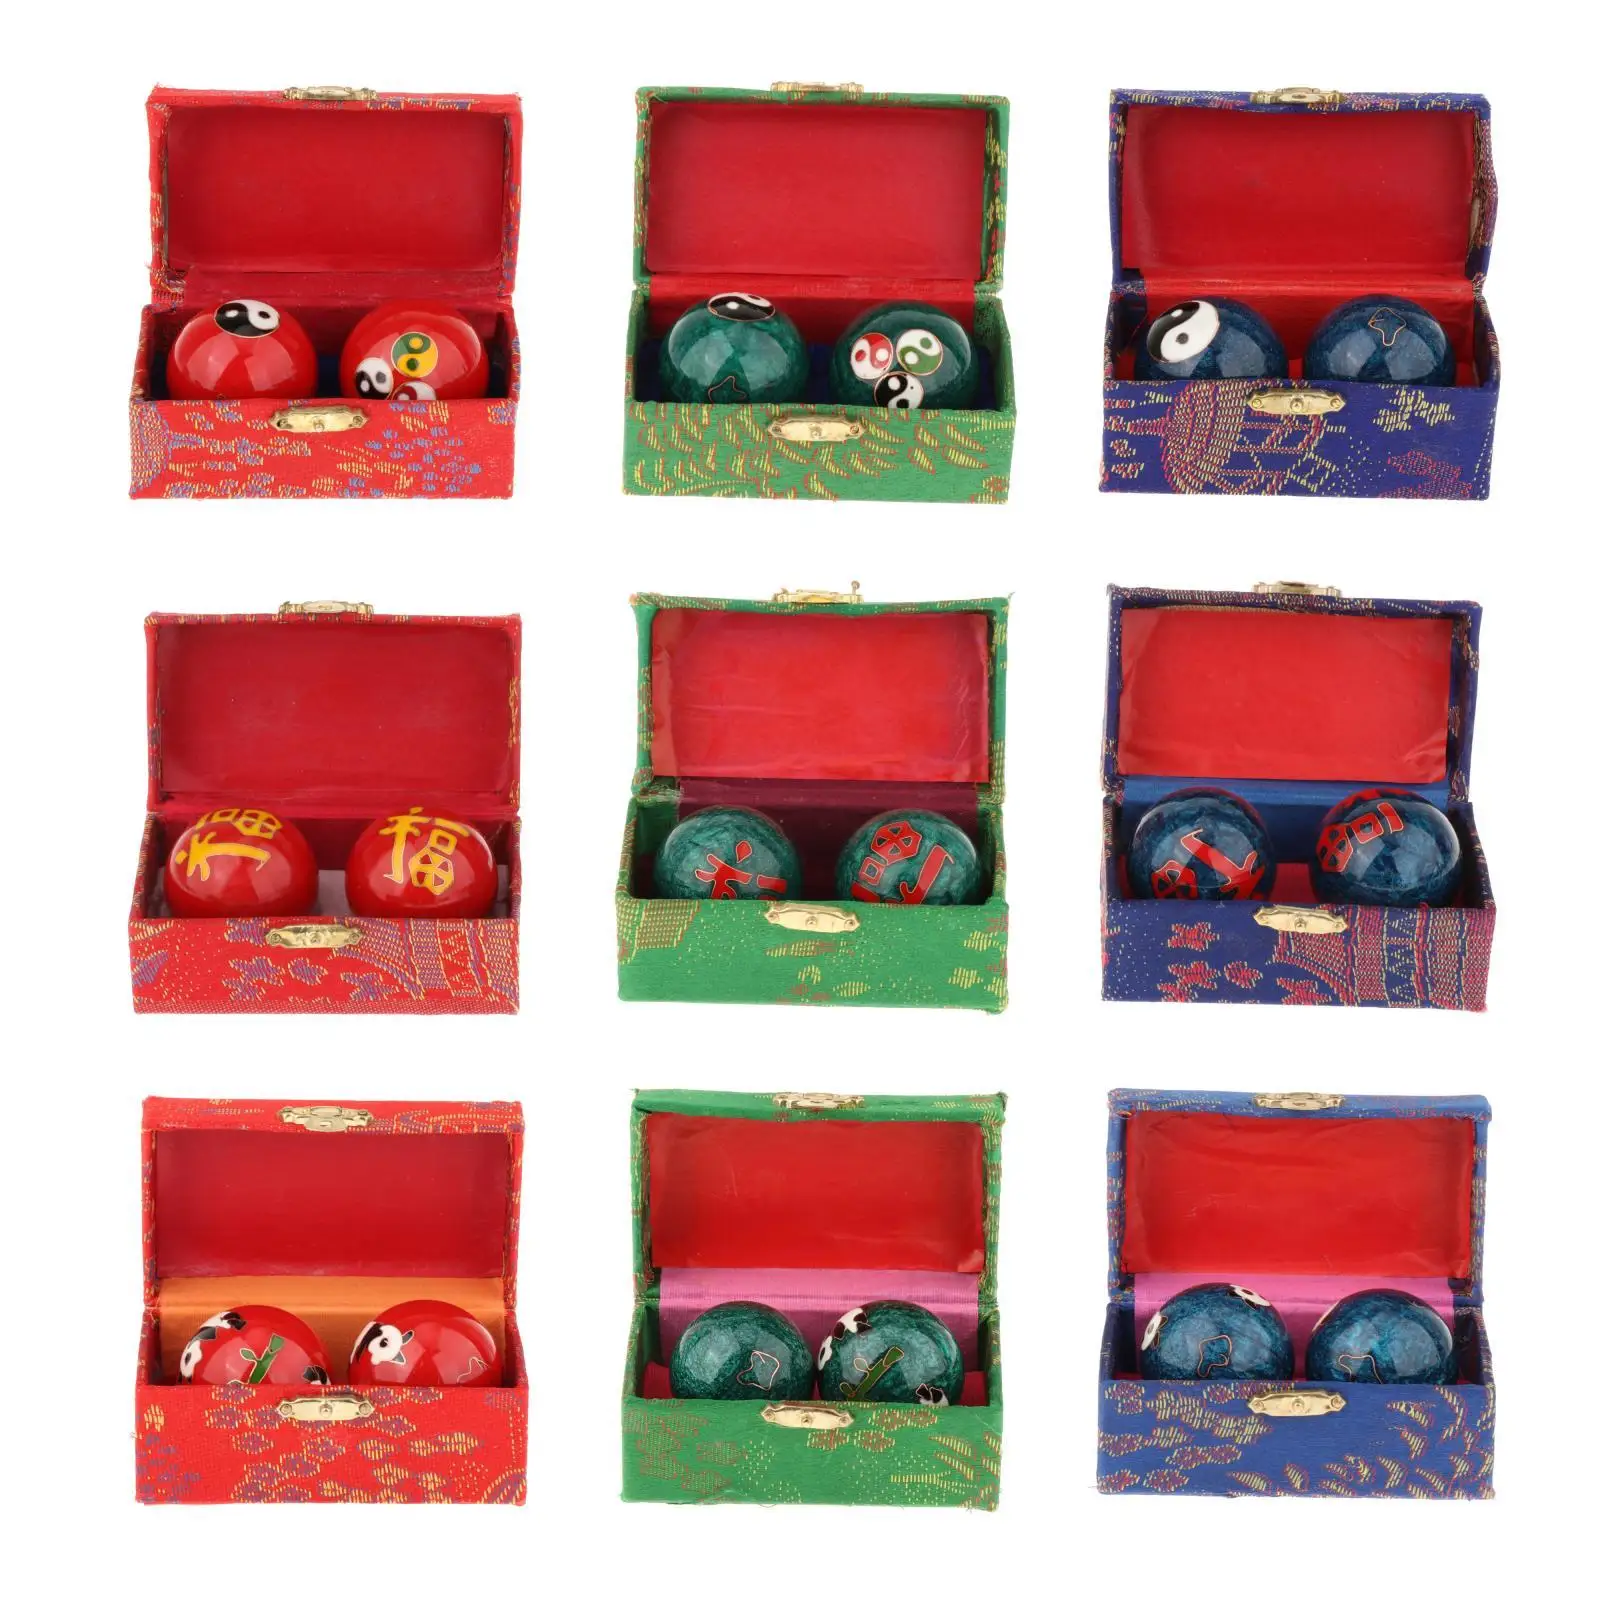 2Pcs Hand Massage Balls with Storage Box Fitness Durable Exerciser Gift Chinese Exercise Handballs for Kids Seniors